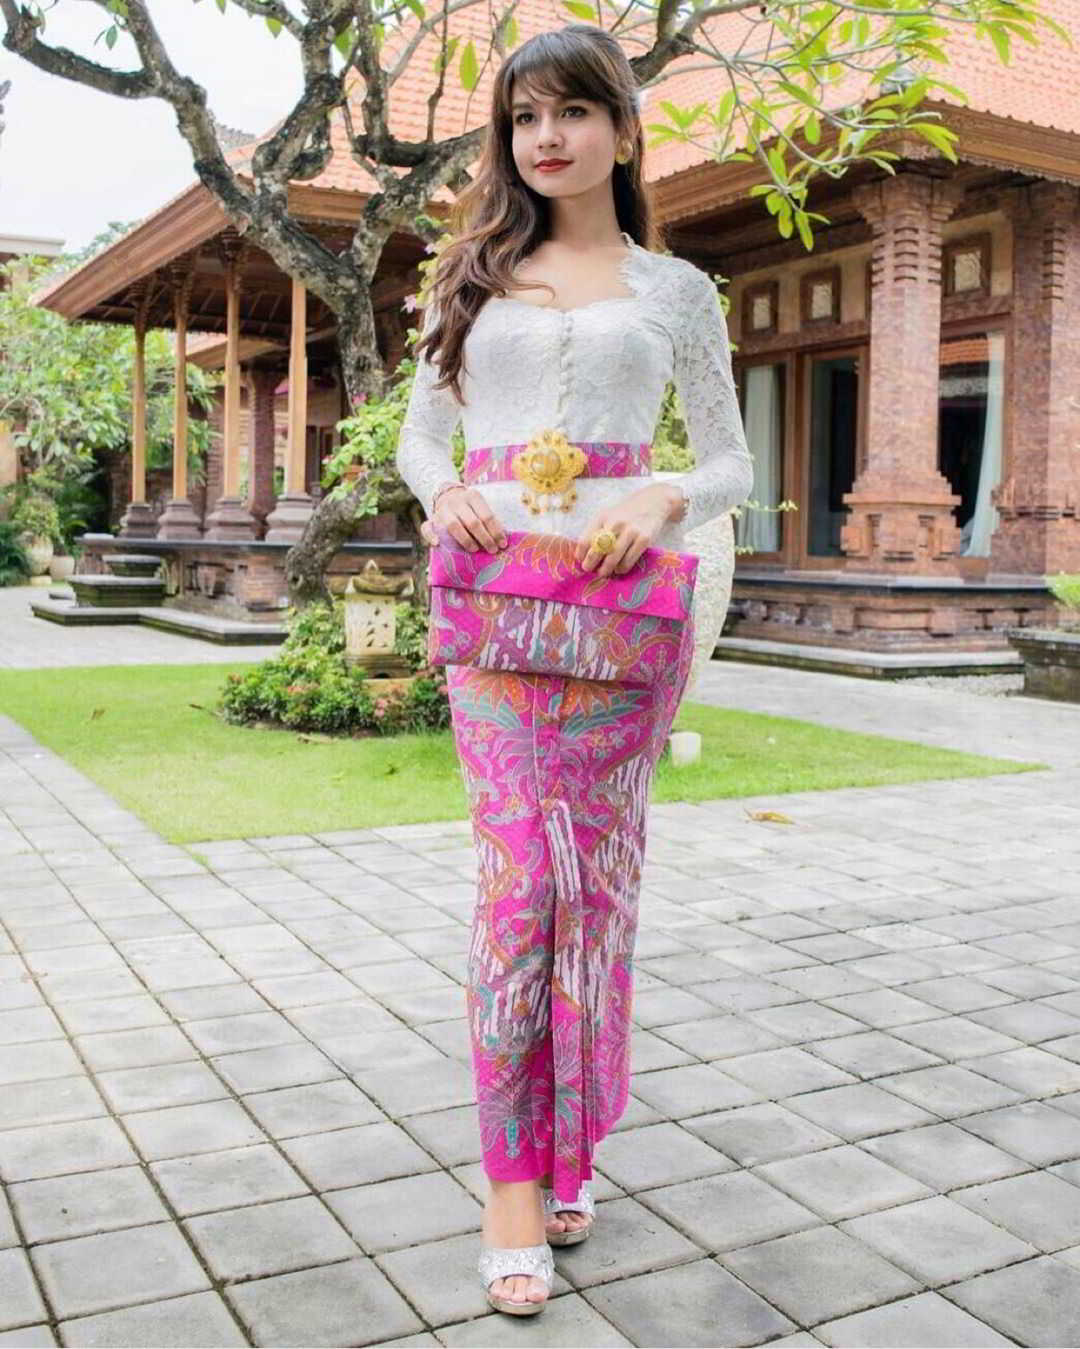 Kebaya Bali Anne Avantie Yang Mempesona - Kumpulan Model Kebaya Modern